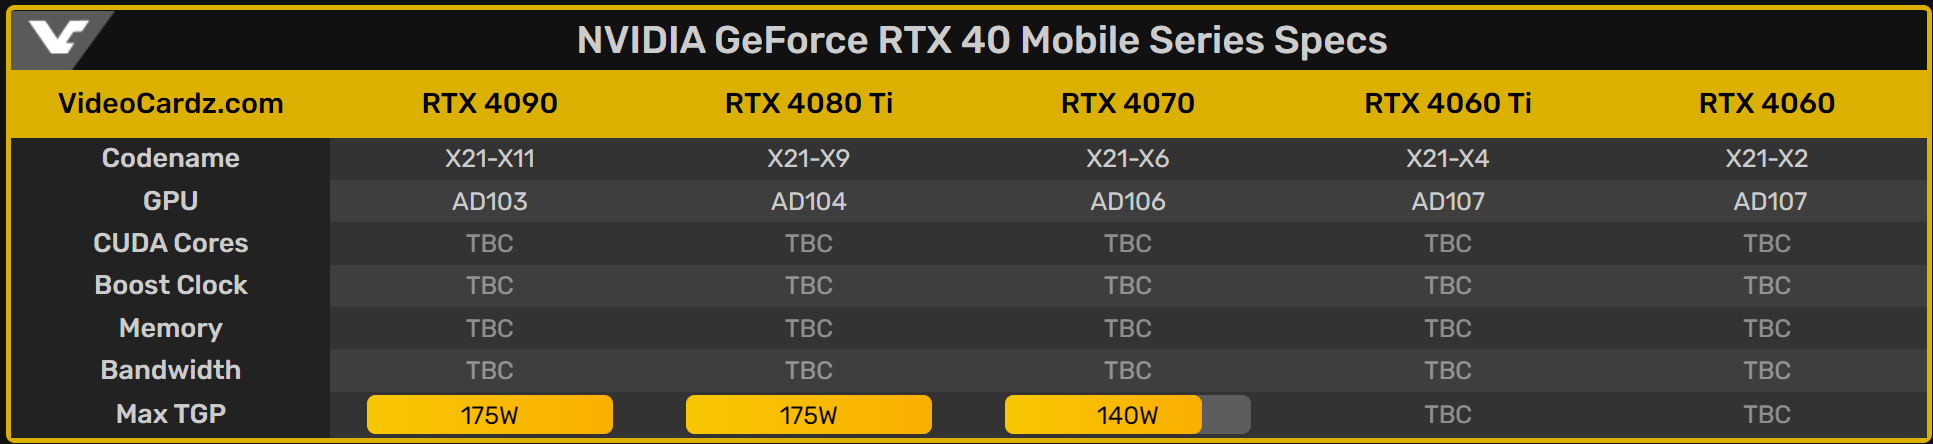 Rtx 4060 какое питание. GEFORCE GTX 3050 ti для ноутбуков 4gb. NVIDIA GEFORCE GTX 3050 ti Laptop GPU. NVIDIA GEFORCE RTX 3050 для ноутбуков. NVIDIA GEFORCE GTX 3050 ti mobile.